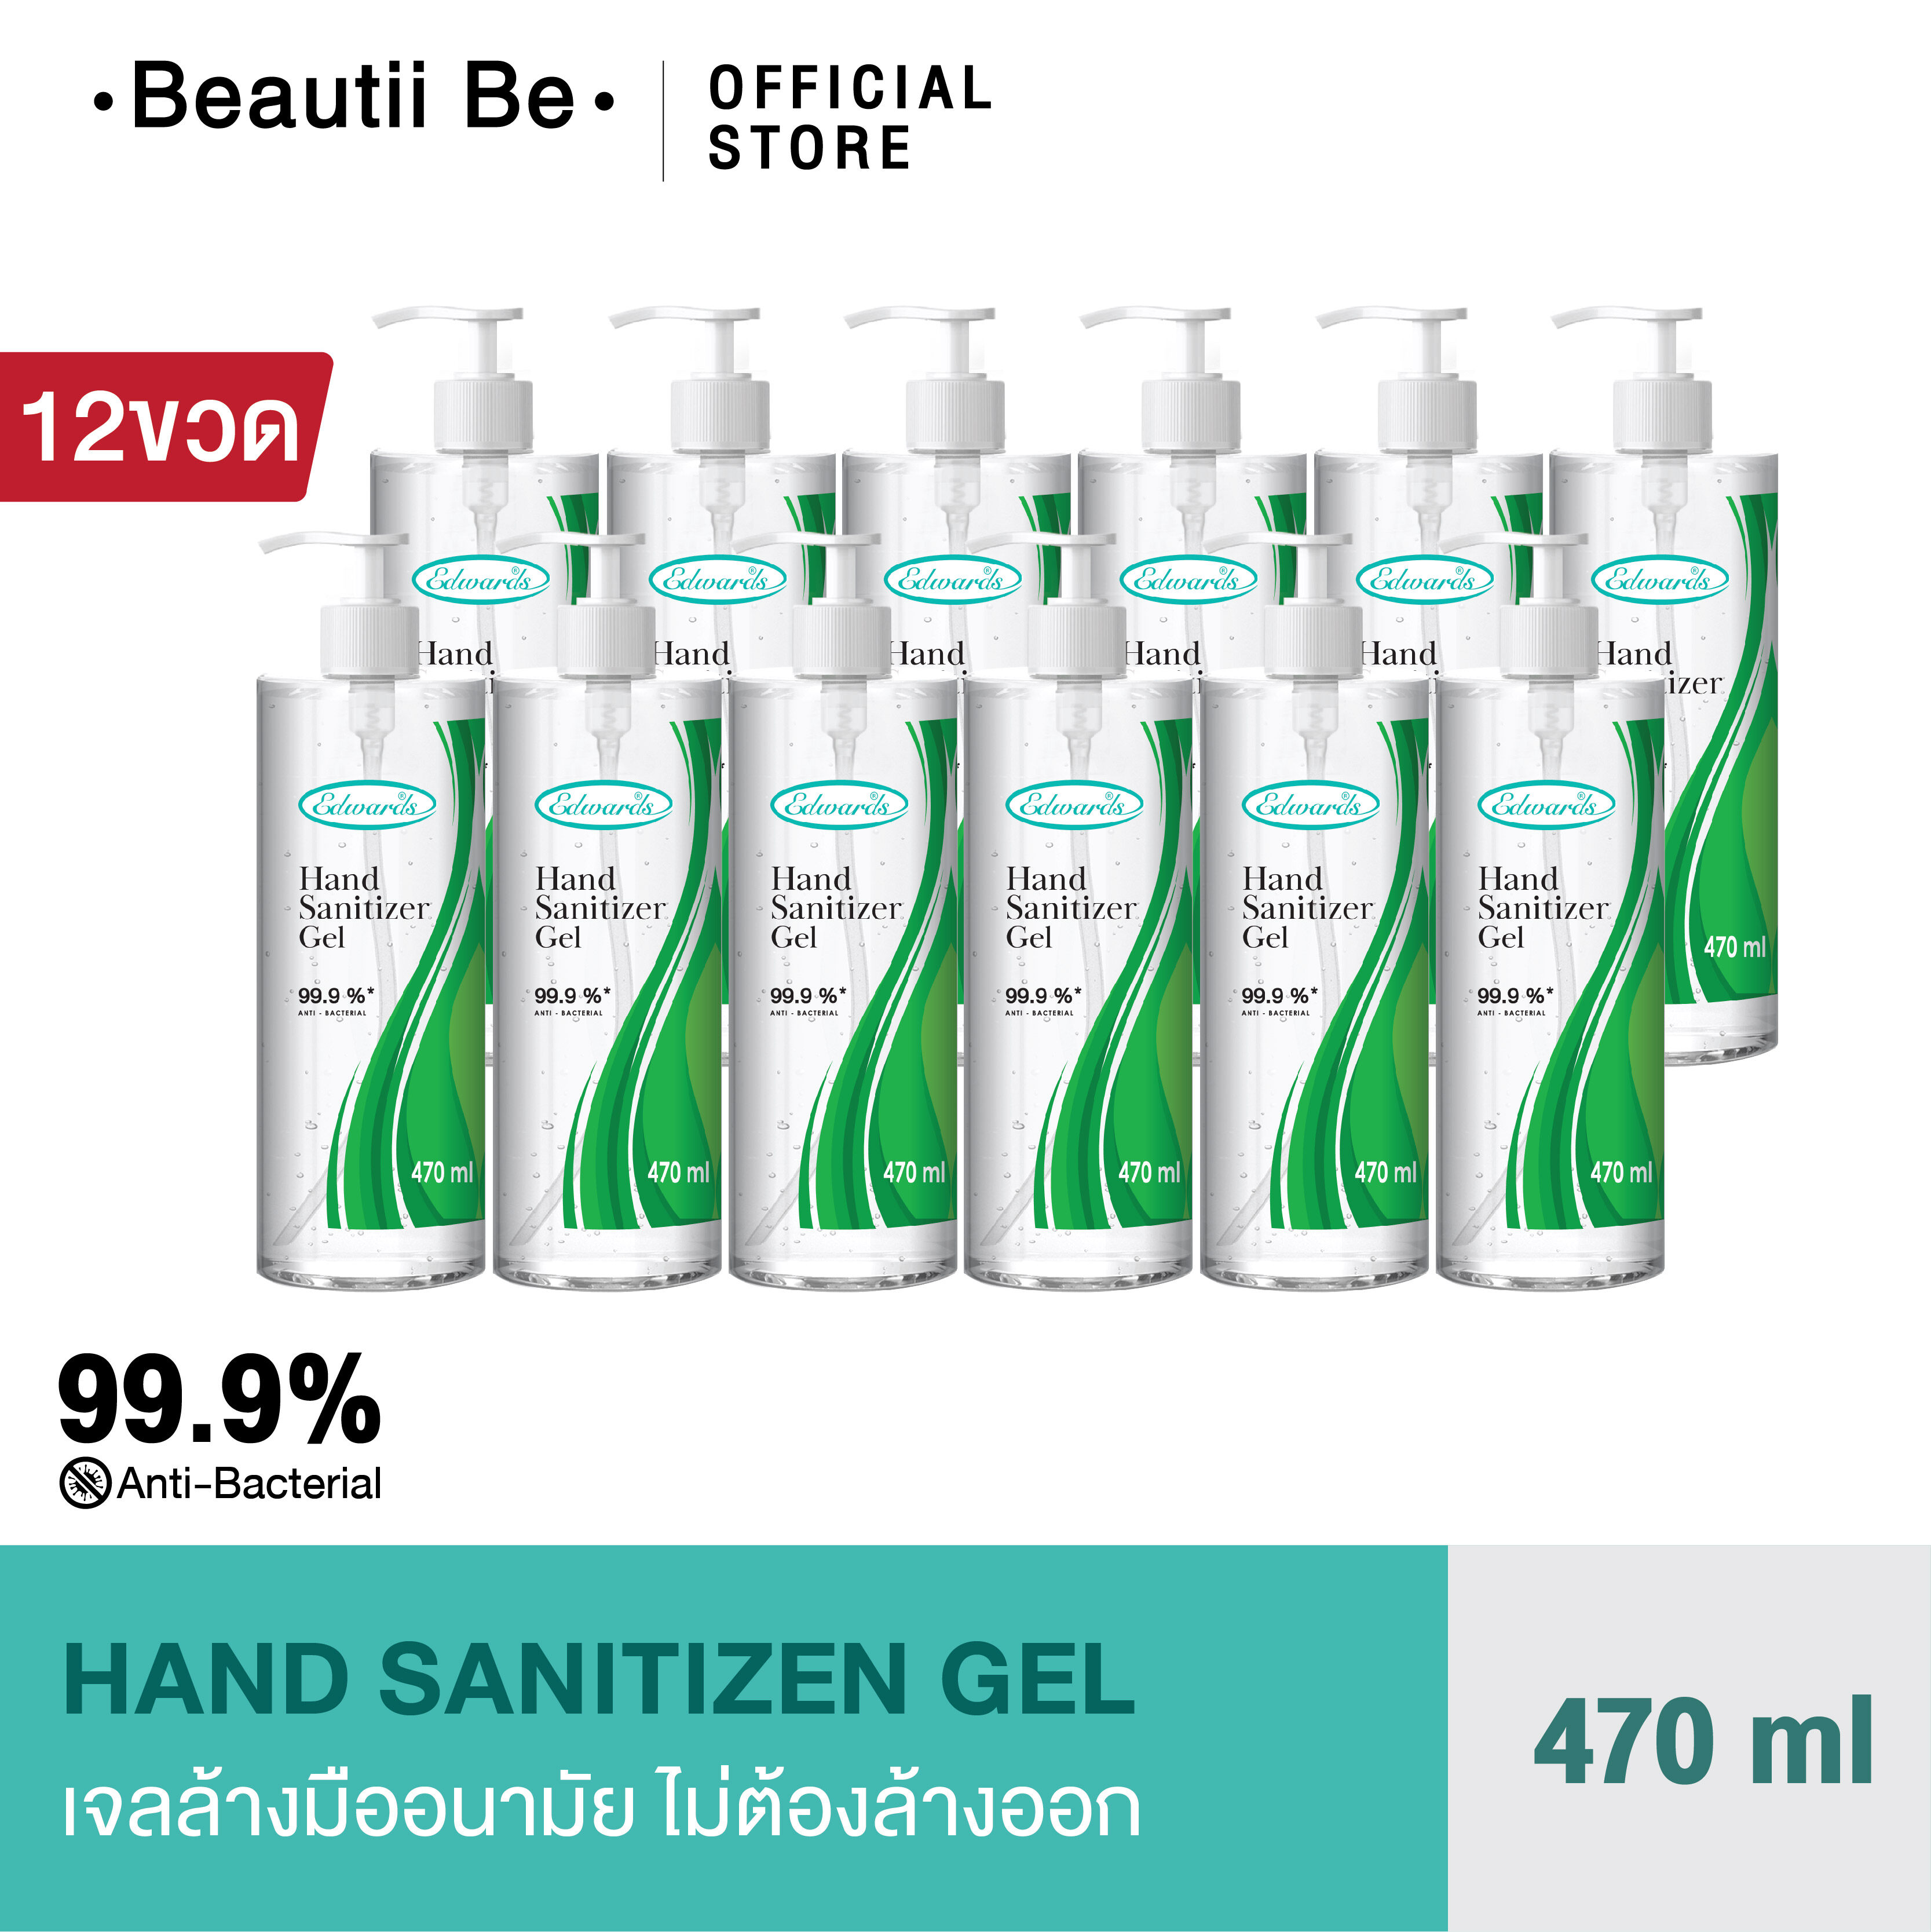 Beautii Be - Edwards Hand Sanitizer Gel 70% [470ml.] เจลล้างมือ 99.9% Anti Bacterial X12PCS.